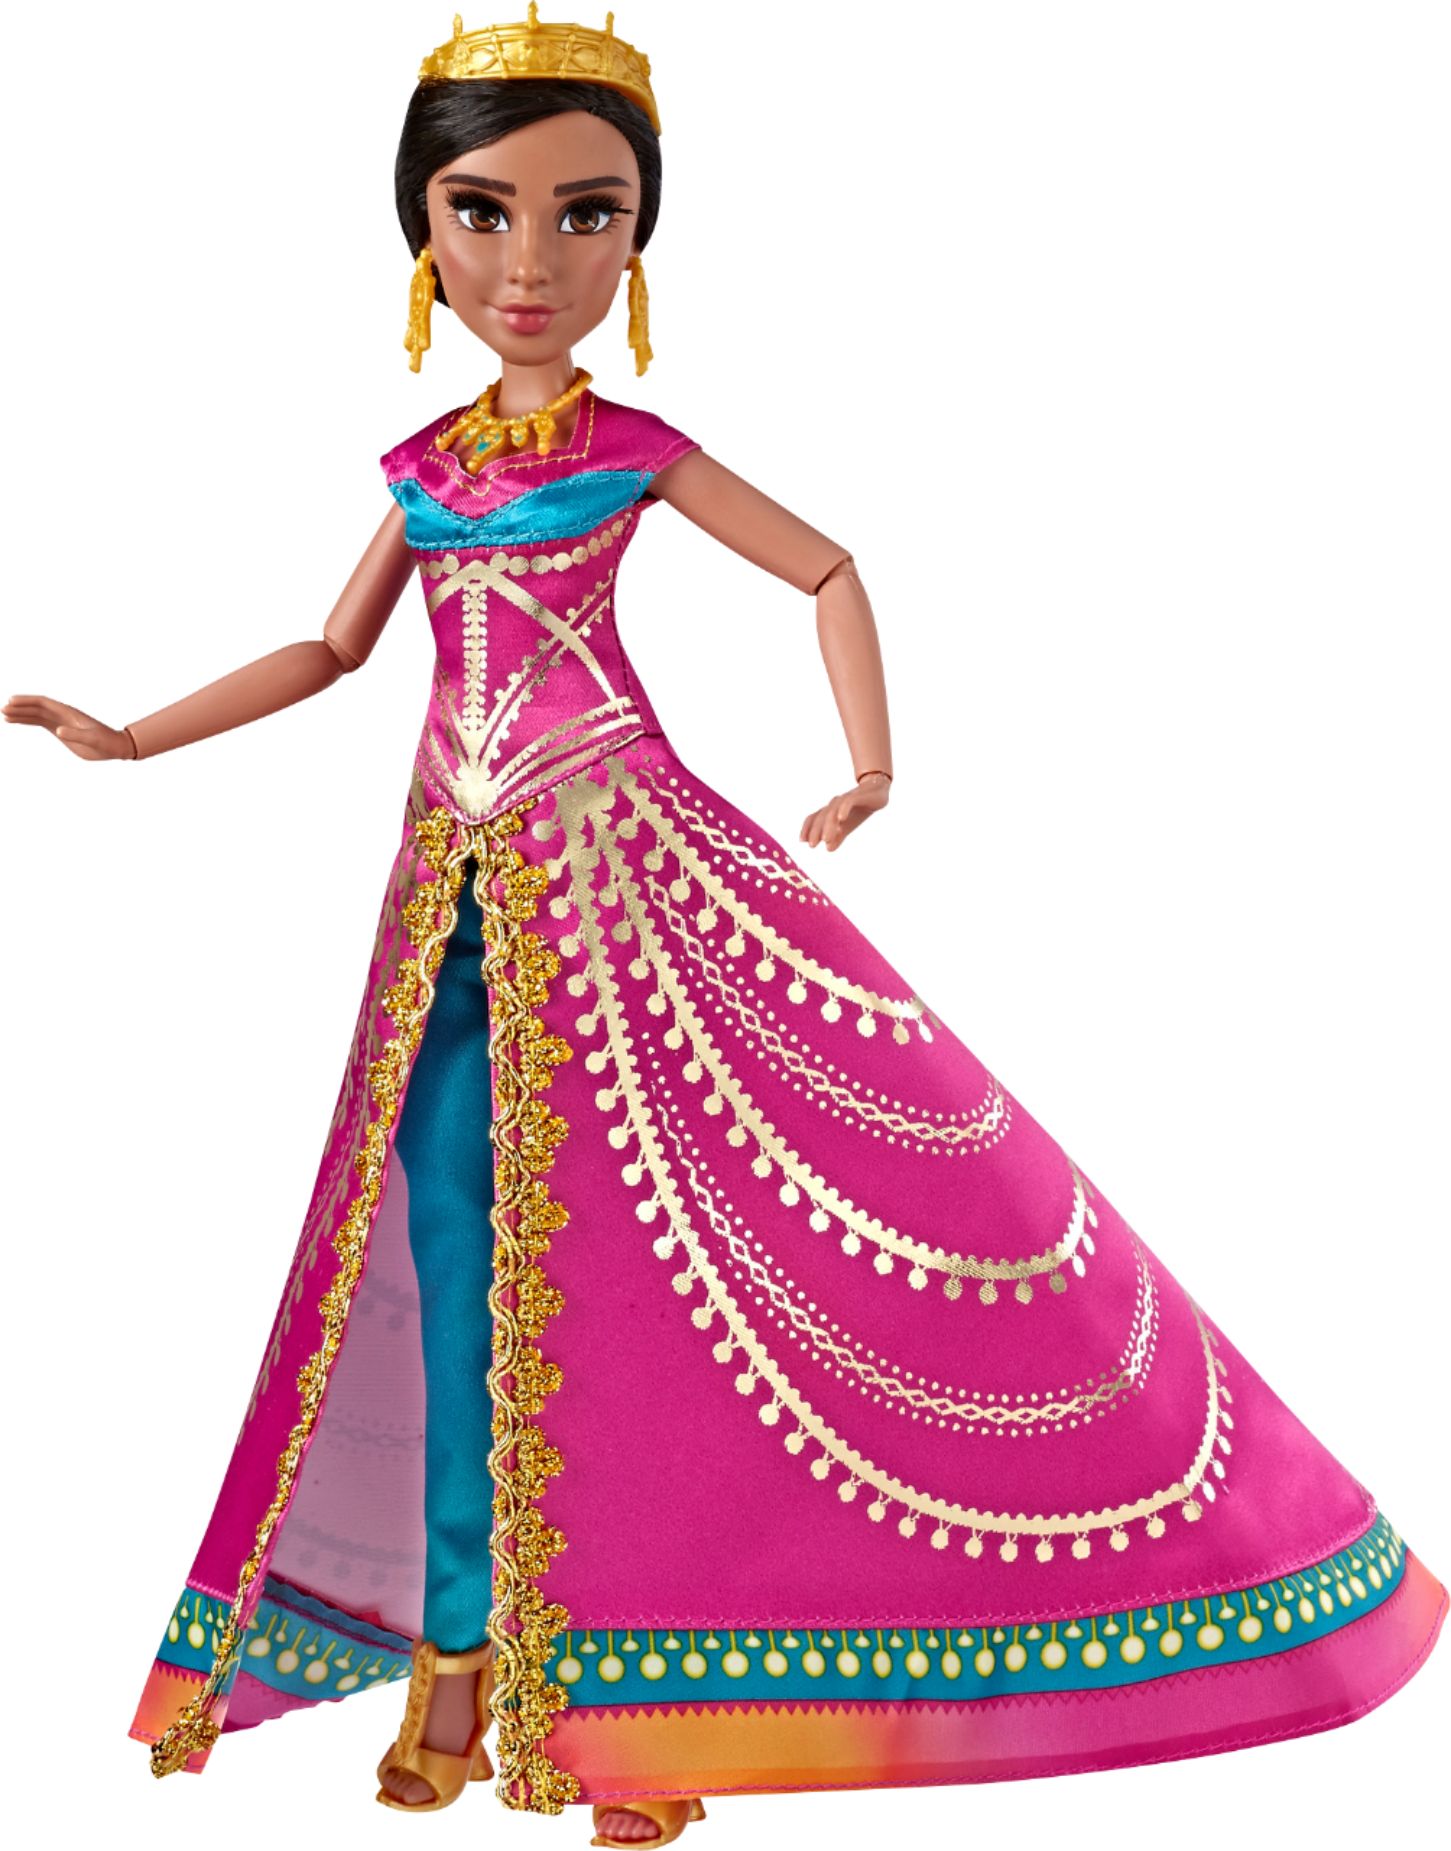 A Closer Look At Disney Aladdin Glamorous Jasmine Deluxe Fashion Doll ...